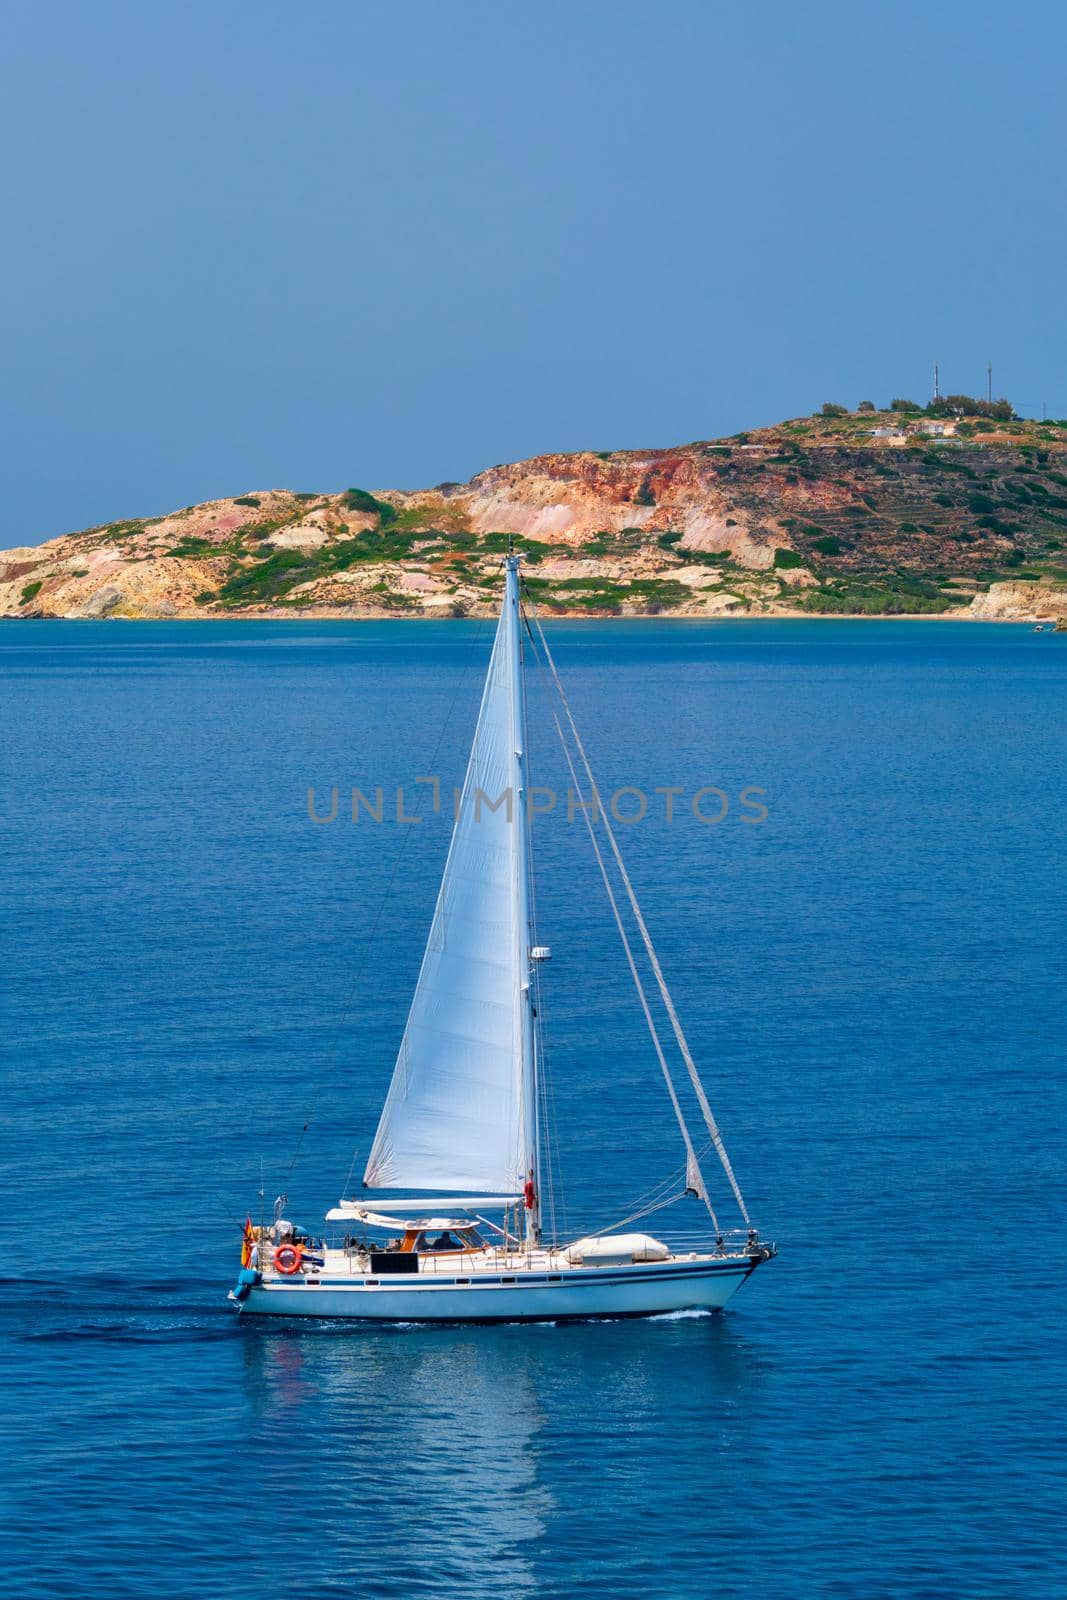 Yacht boat in Aegean sea near Milos island , Greece by dimol